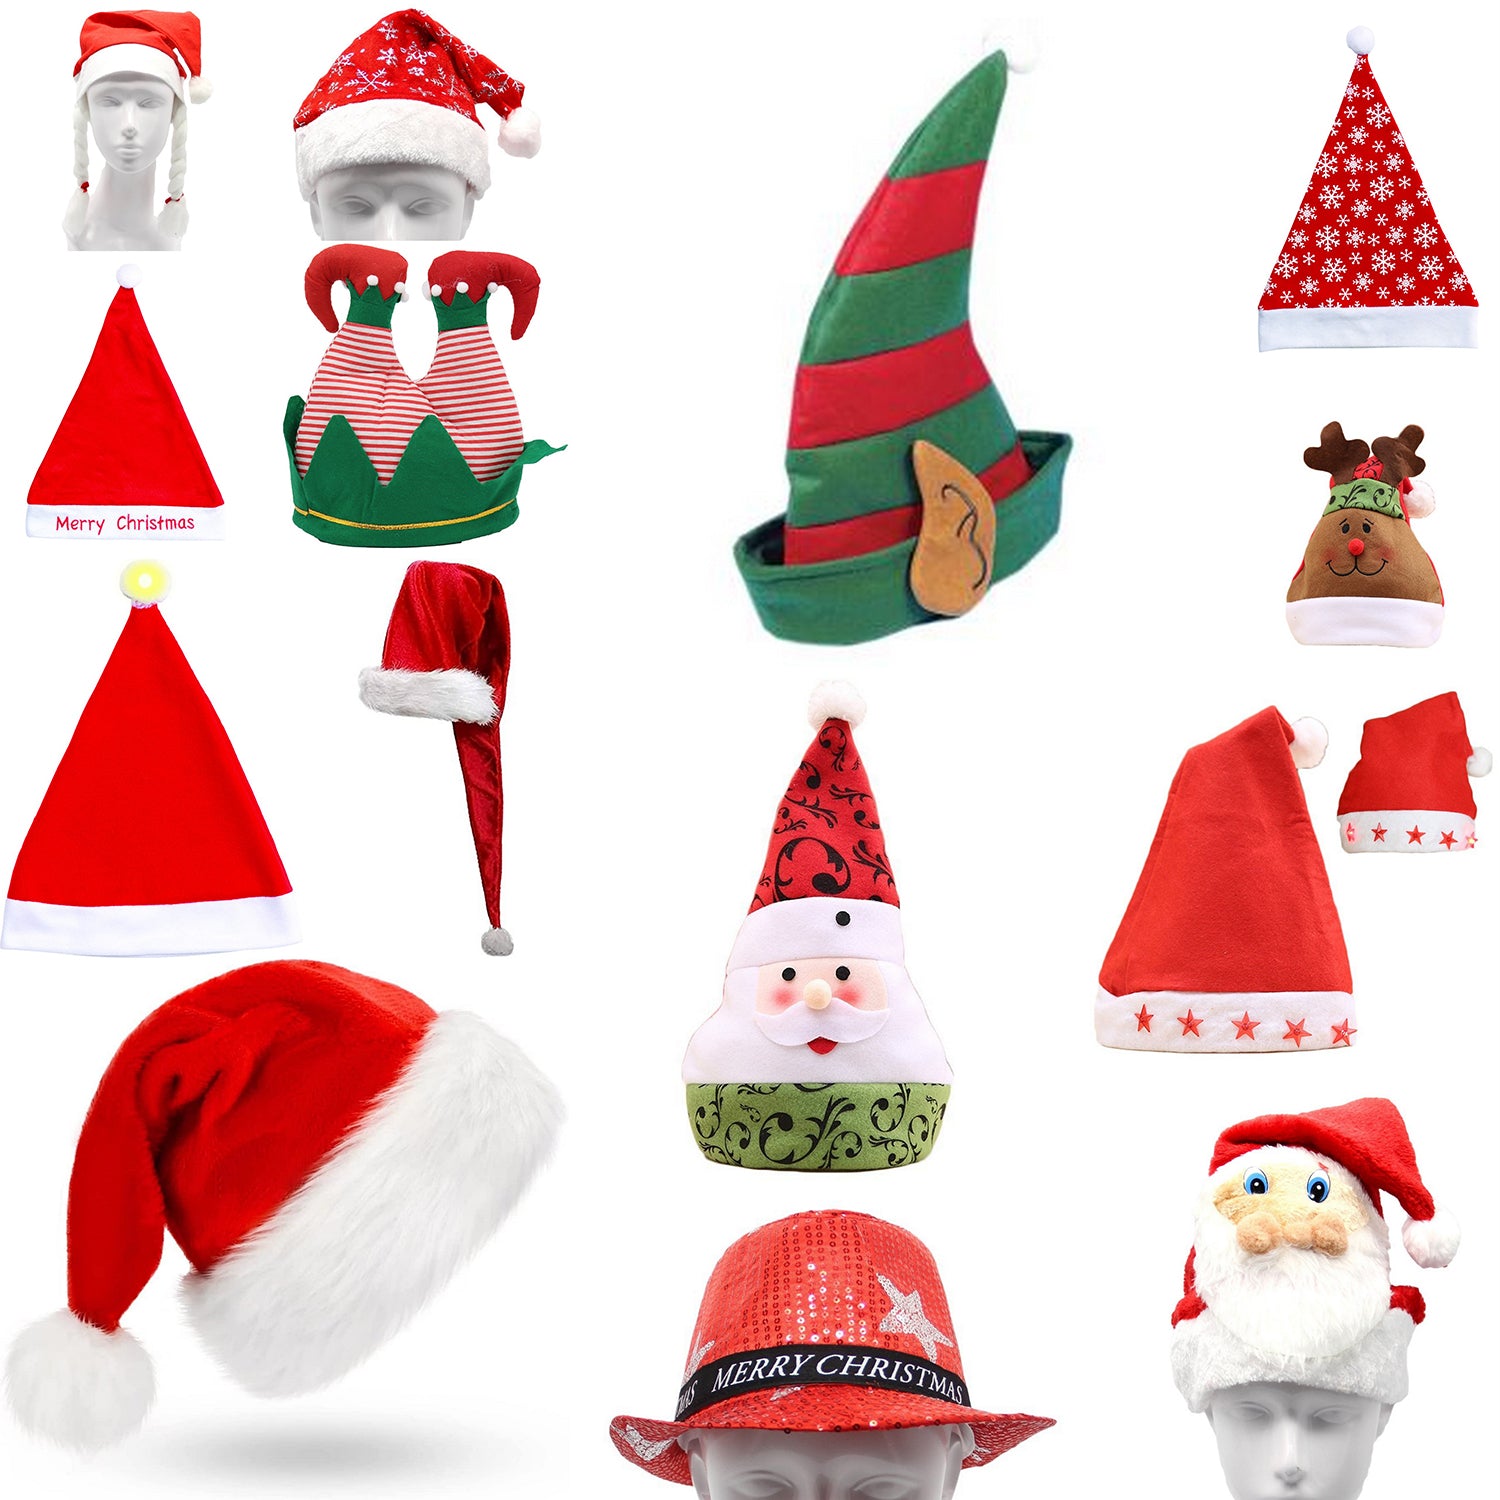 Christmas Unisex Adults Kids Novelty Hat Xmas Party Cap Santa Costume Dress Up, Santa Hat - Snowflakes